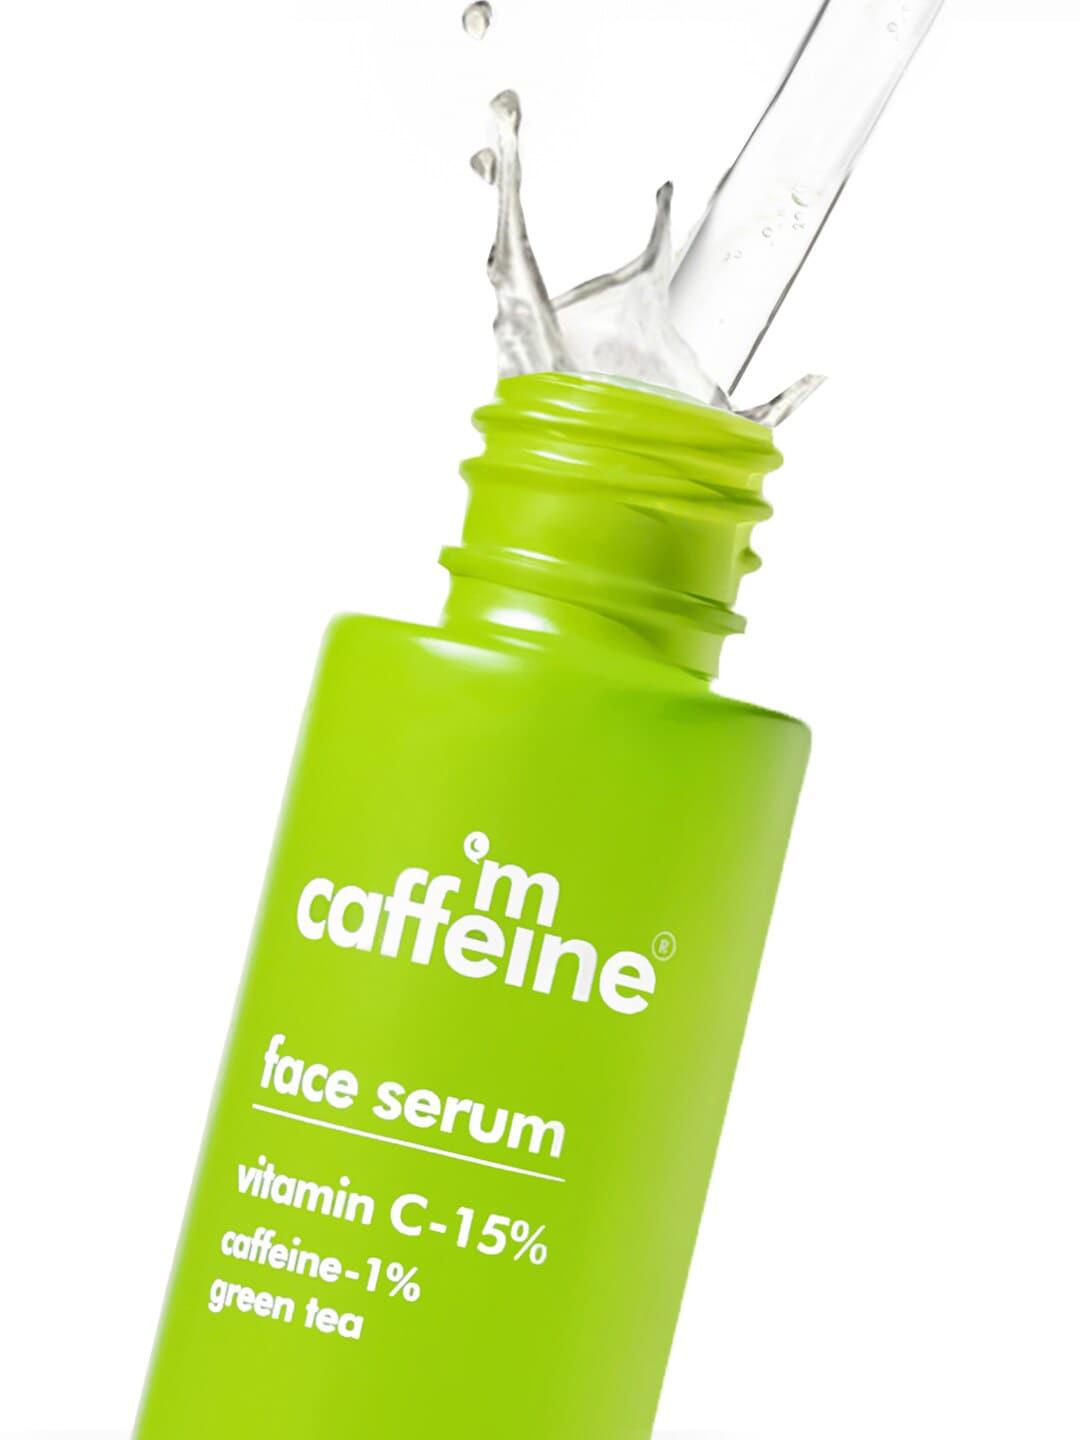 mcaffeine 15 % vitamin c  green tea face serum - 30ml